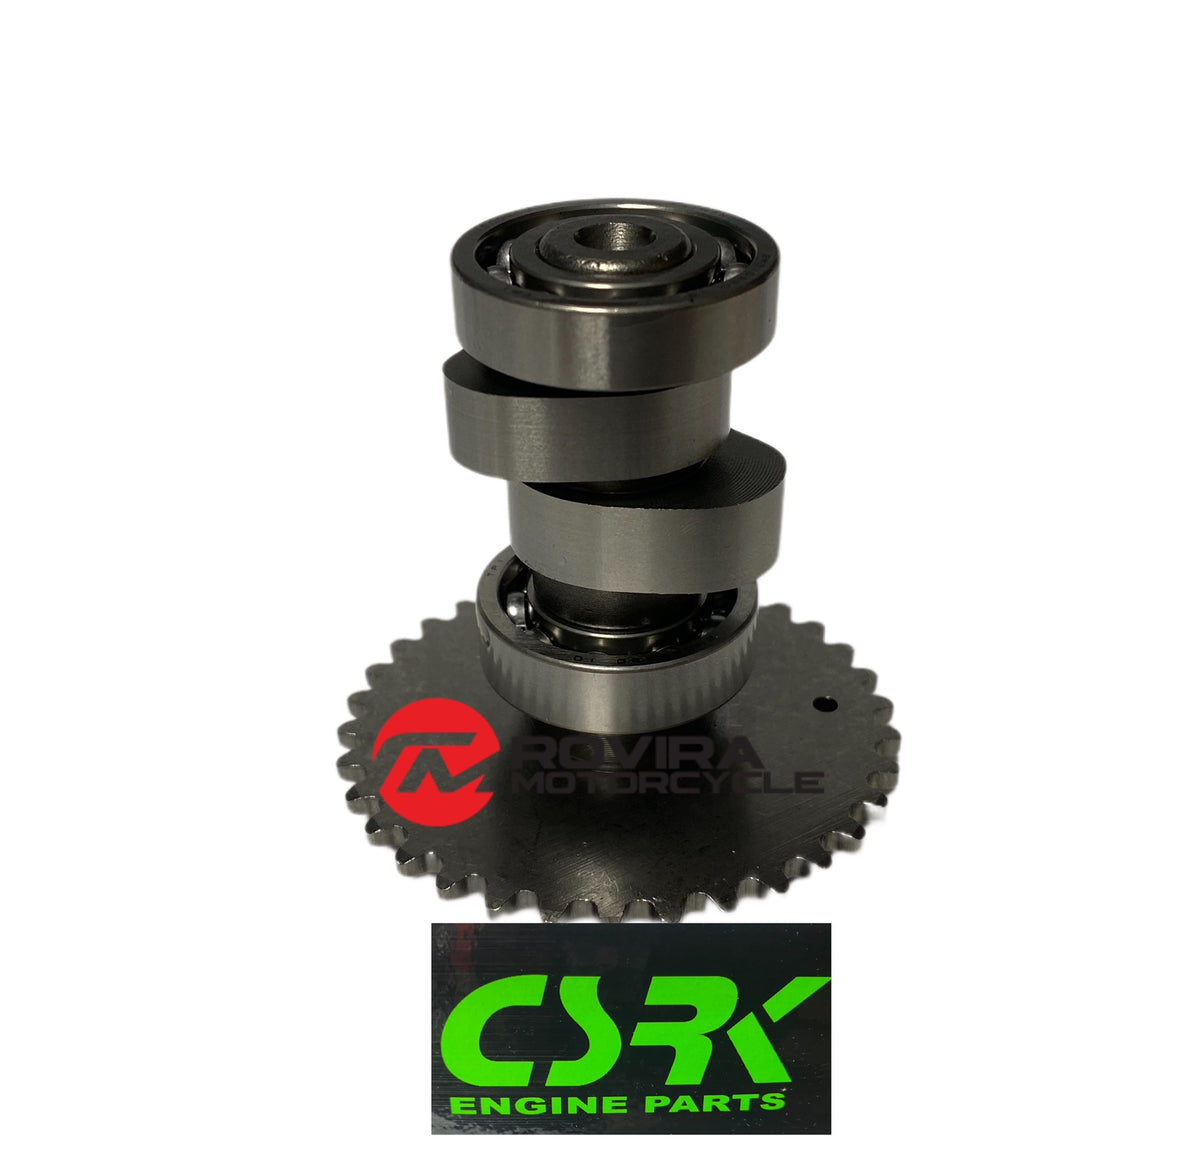 CSRK 6.35 gy6 150 4 valve camshaft (Taiwan)